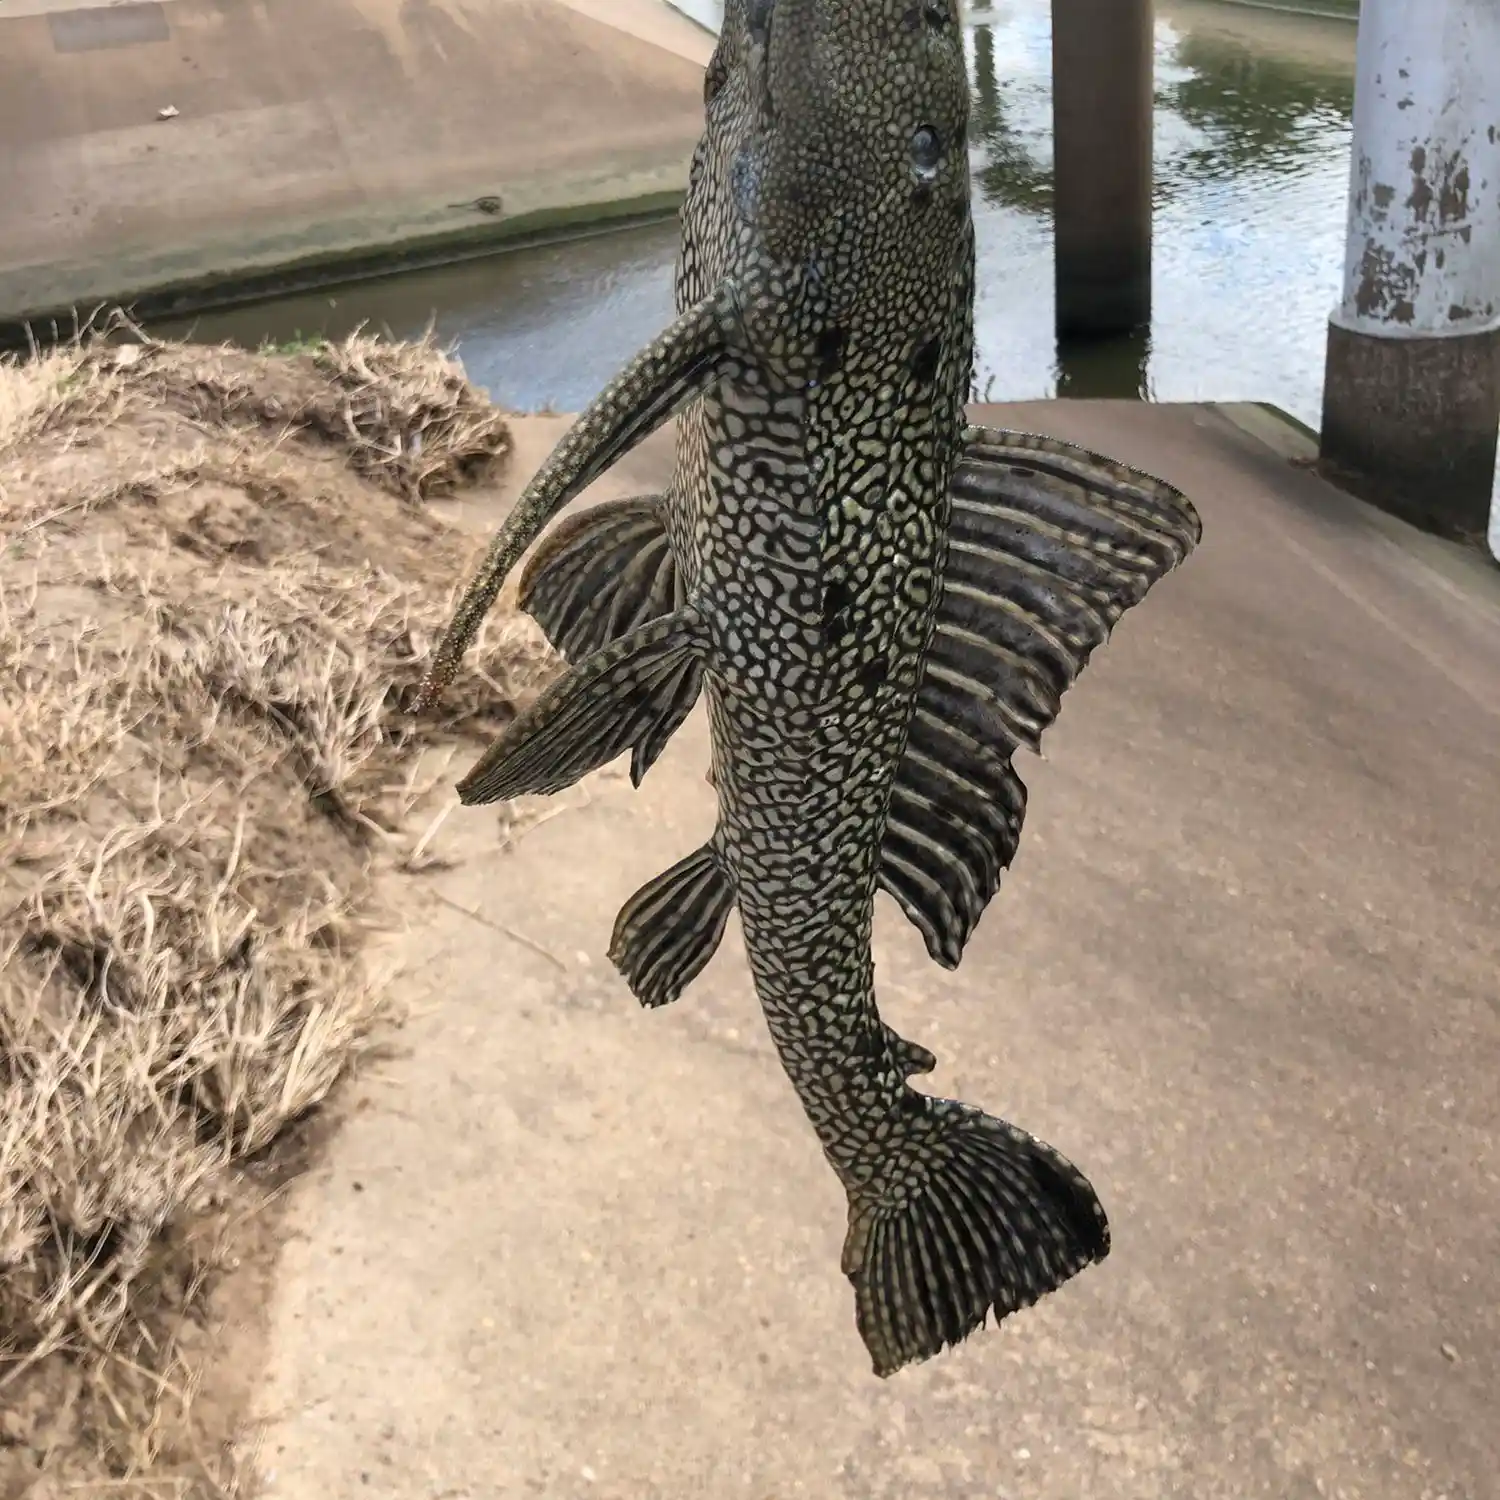 Massive fish caught in Houston, Texas, bayou